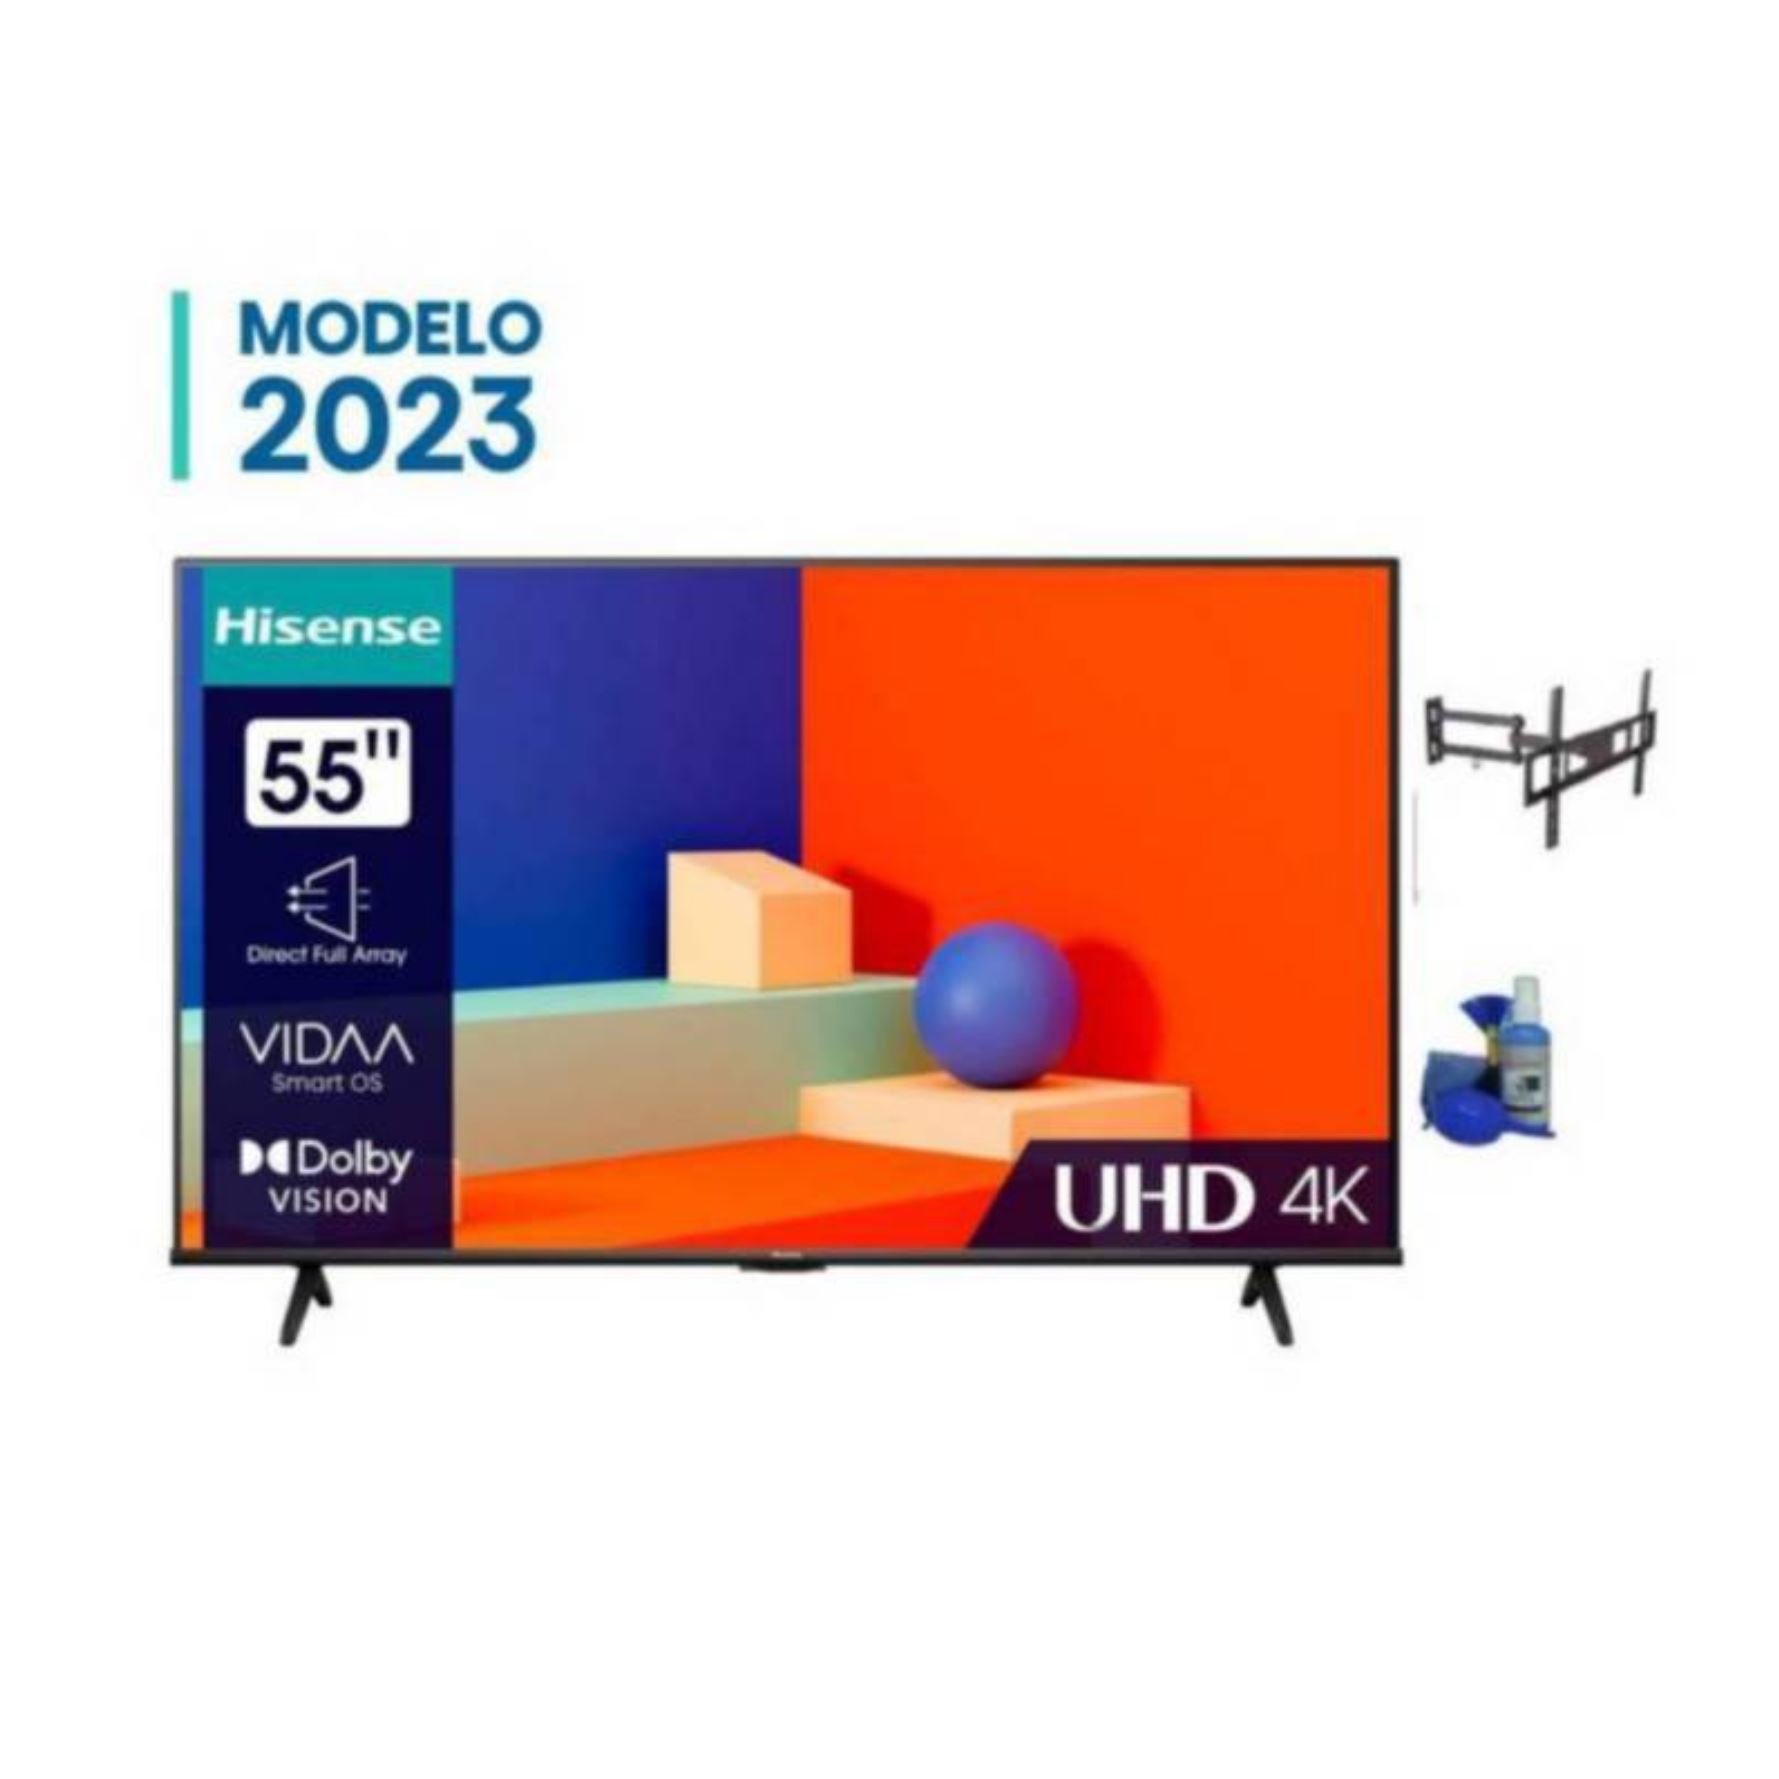 Televisor Hisense 55 55A6K UHD 4K Vidaa Dolby Visión HDR Smart Tv 2023 + Kit y Rack